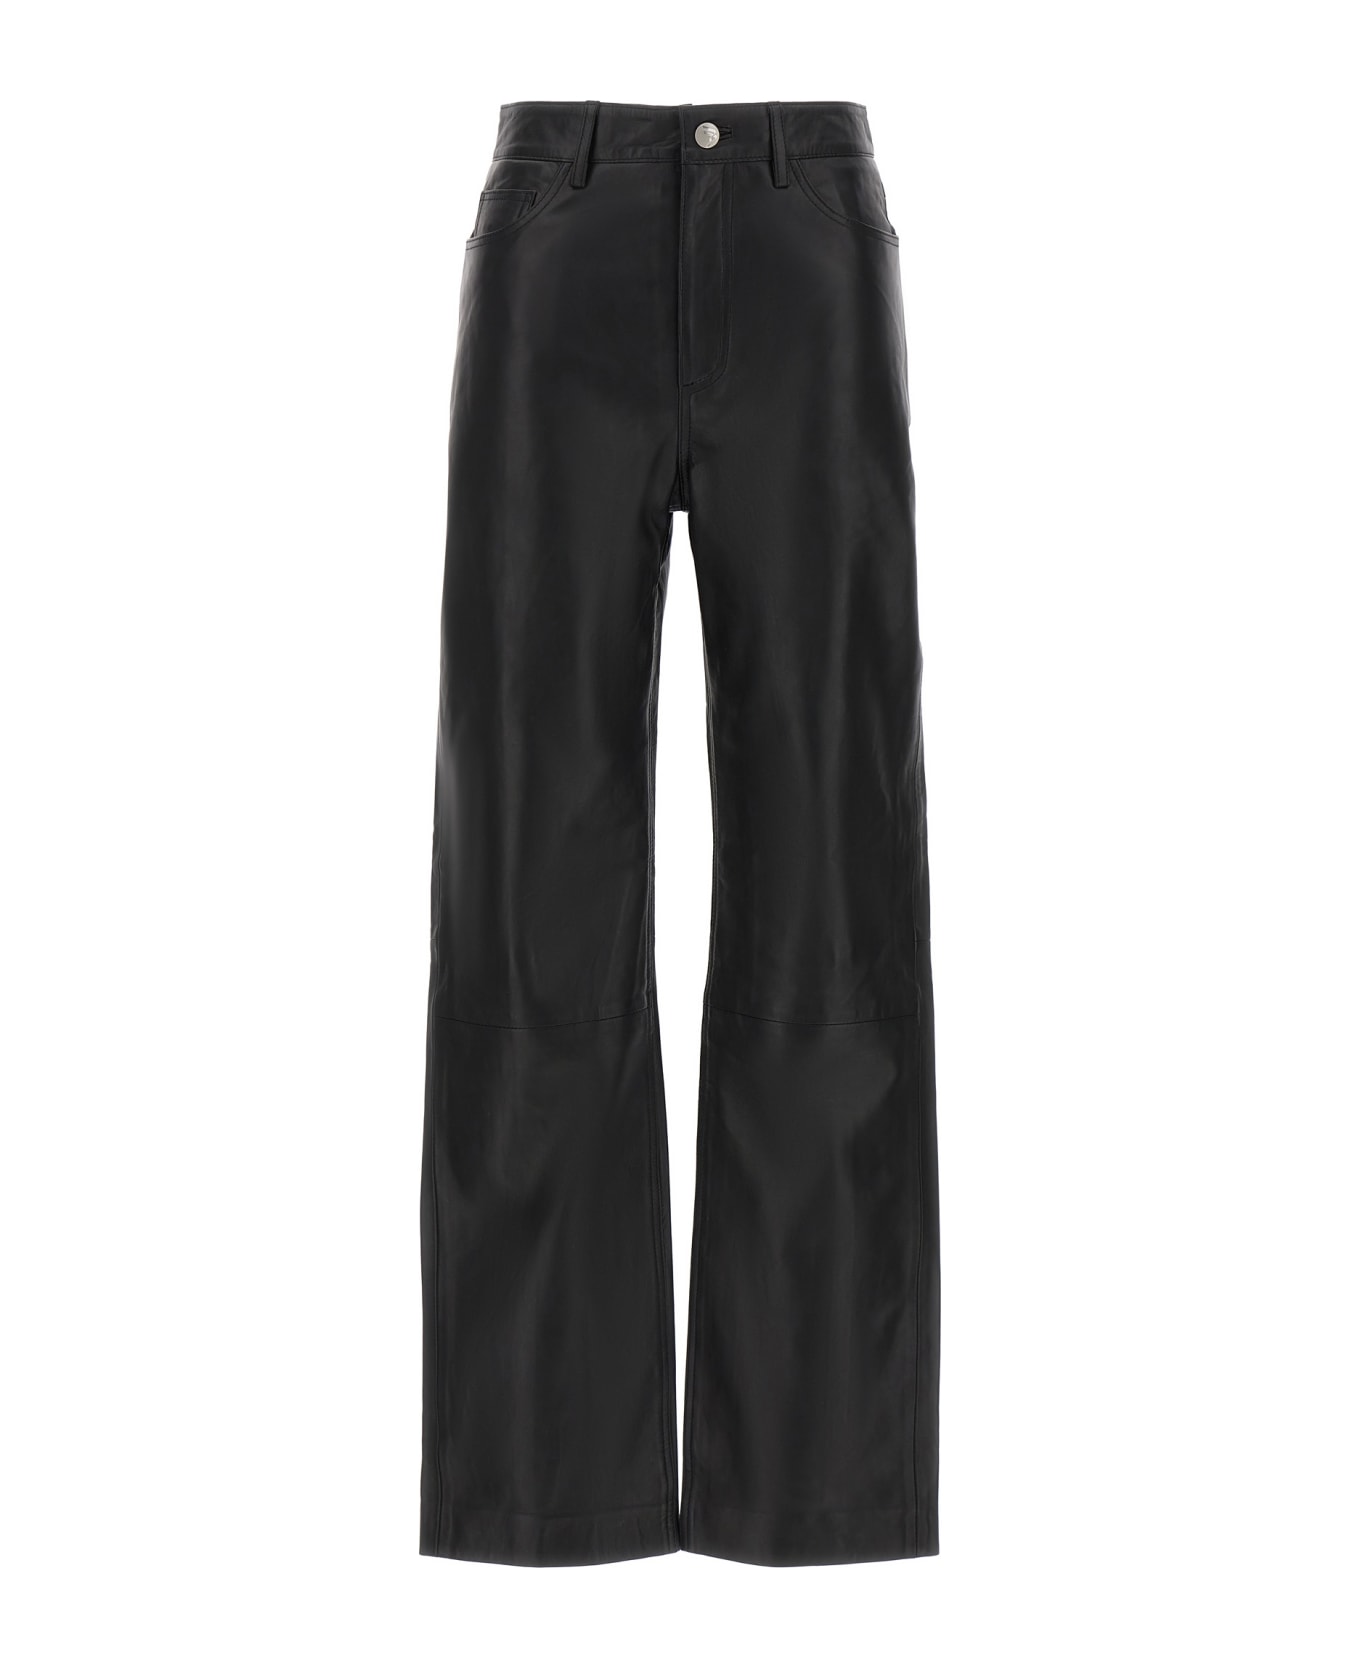 REMAIN Birger Christensen Leather Pants - Black